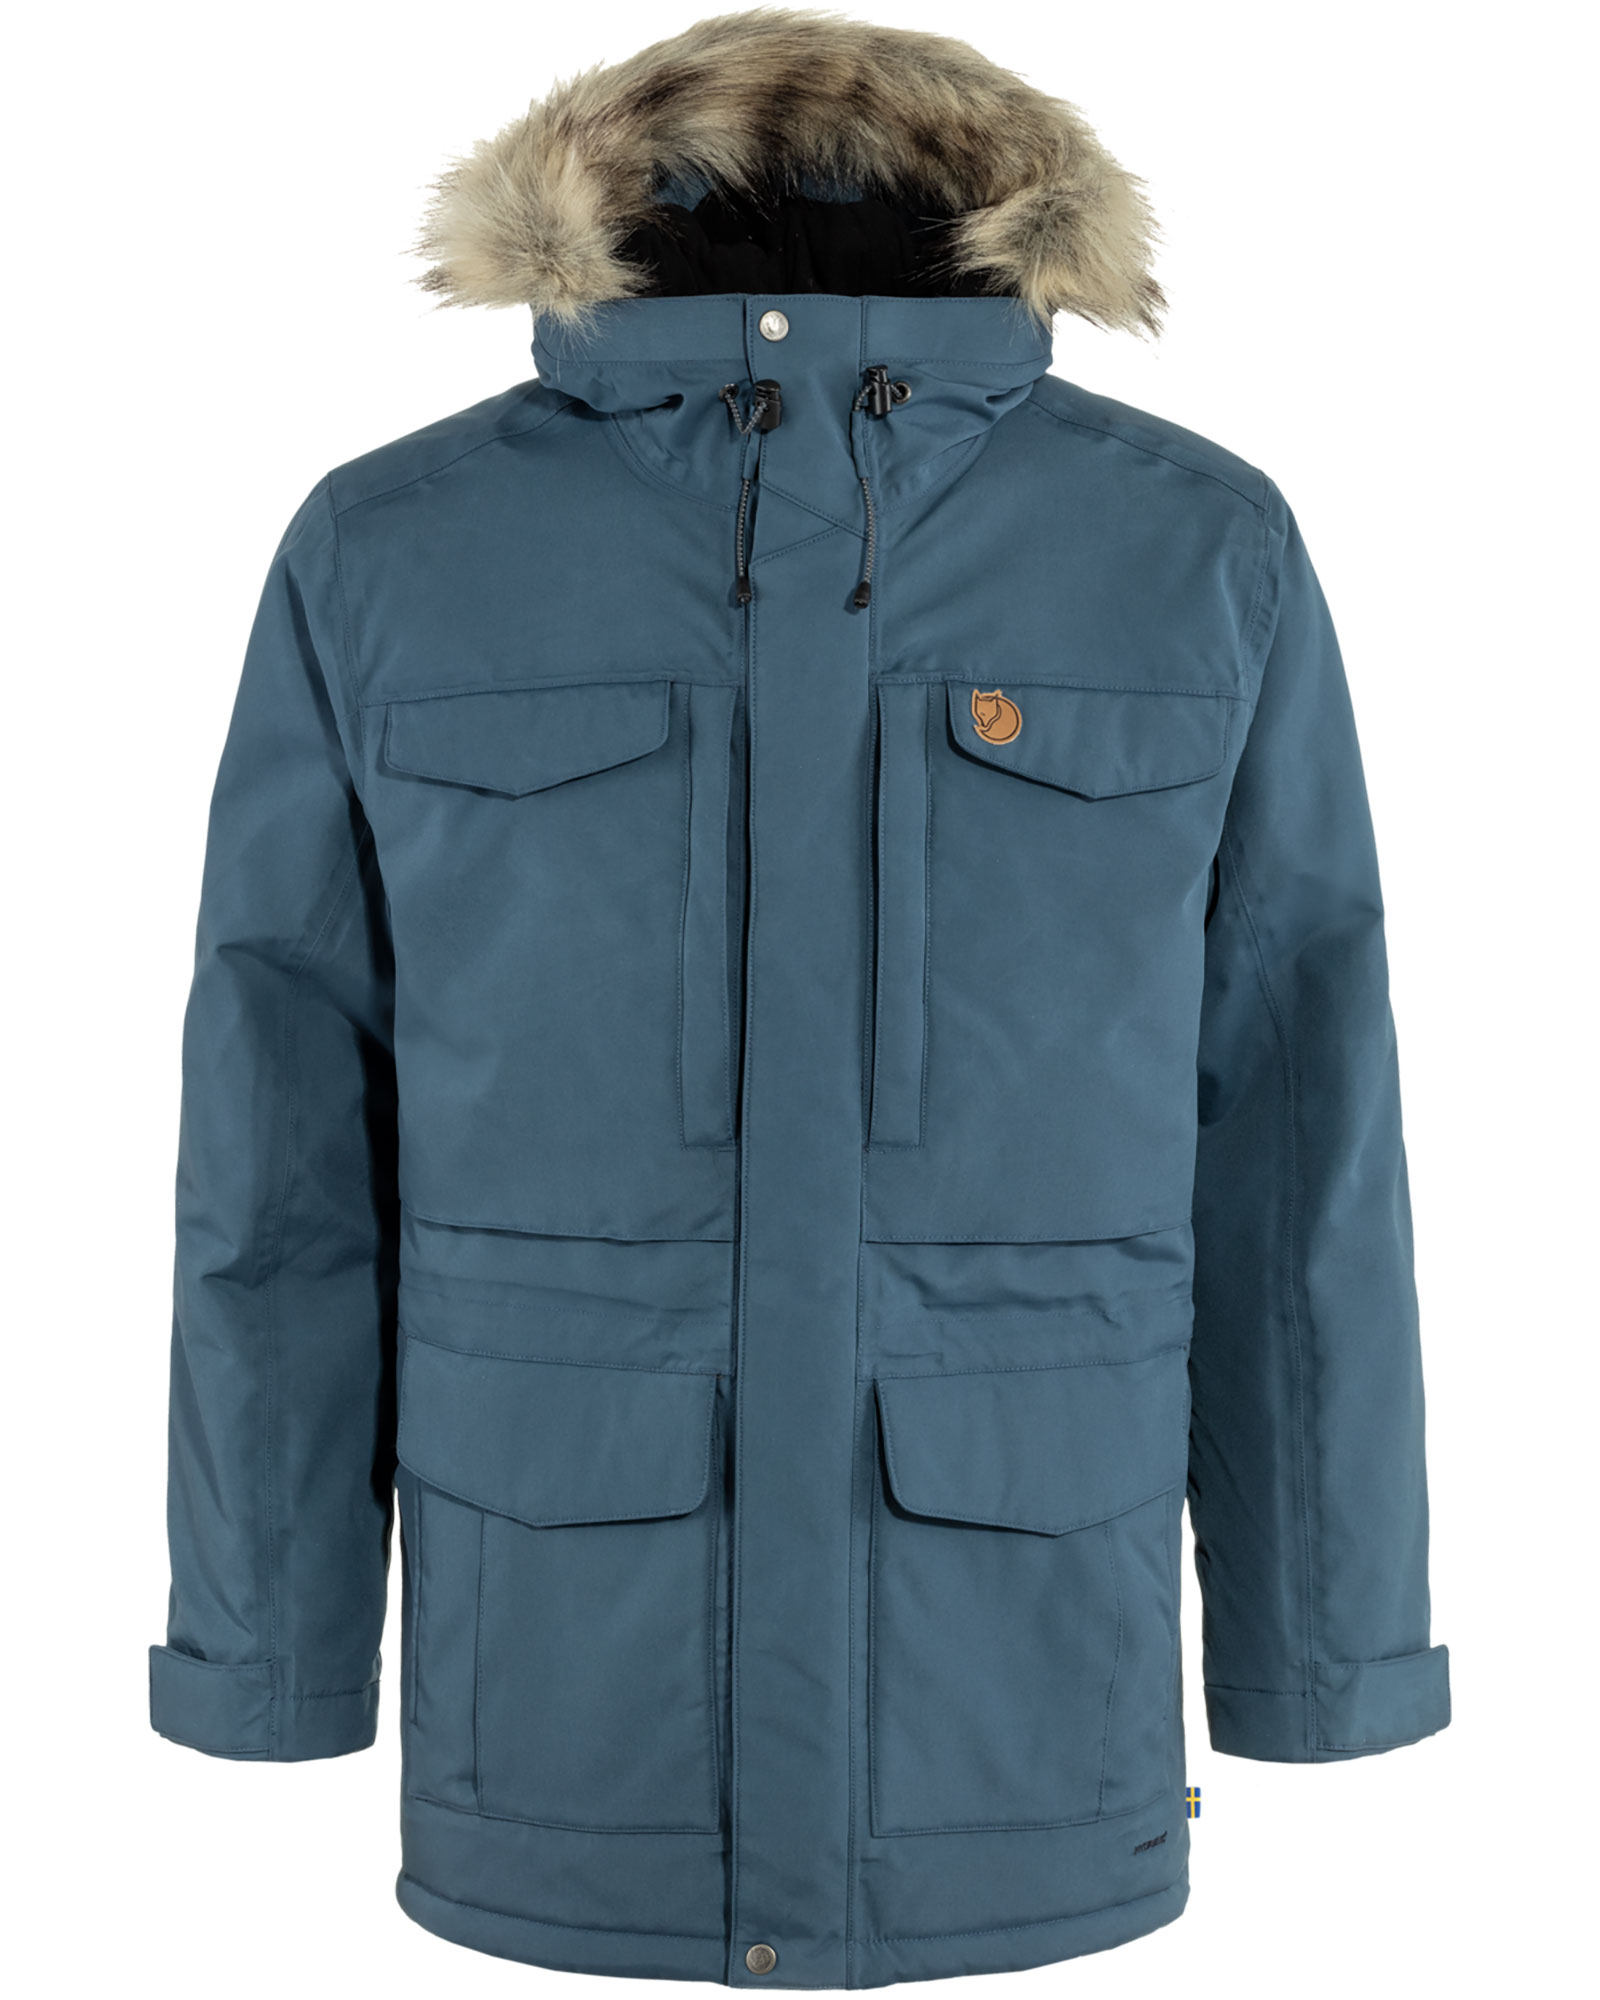 Fjallraven Nuuk Men’s Parka Jacket - Mountain Blue XL